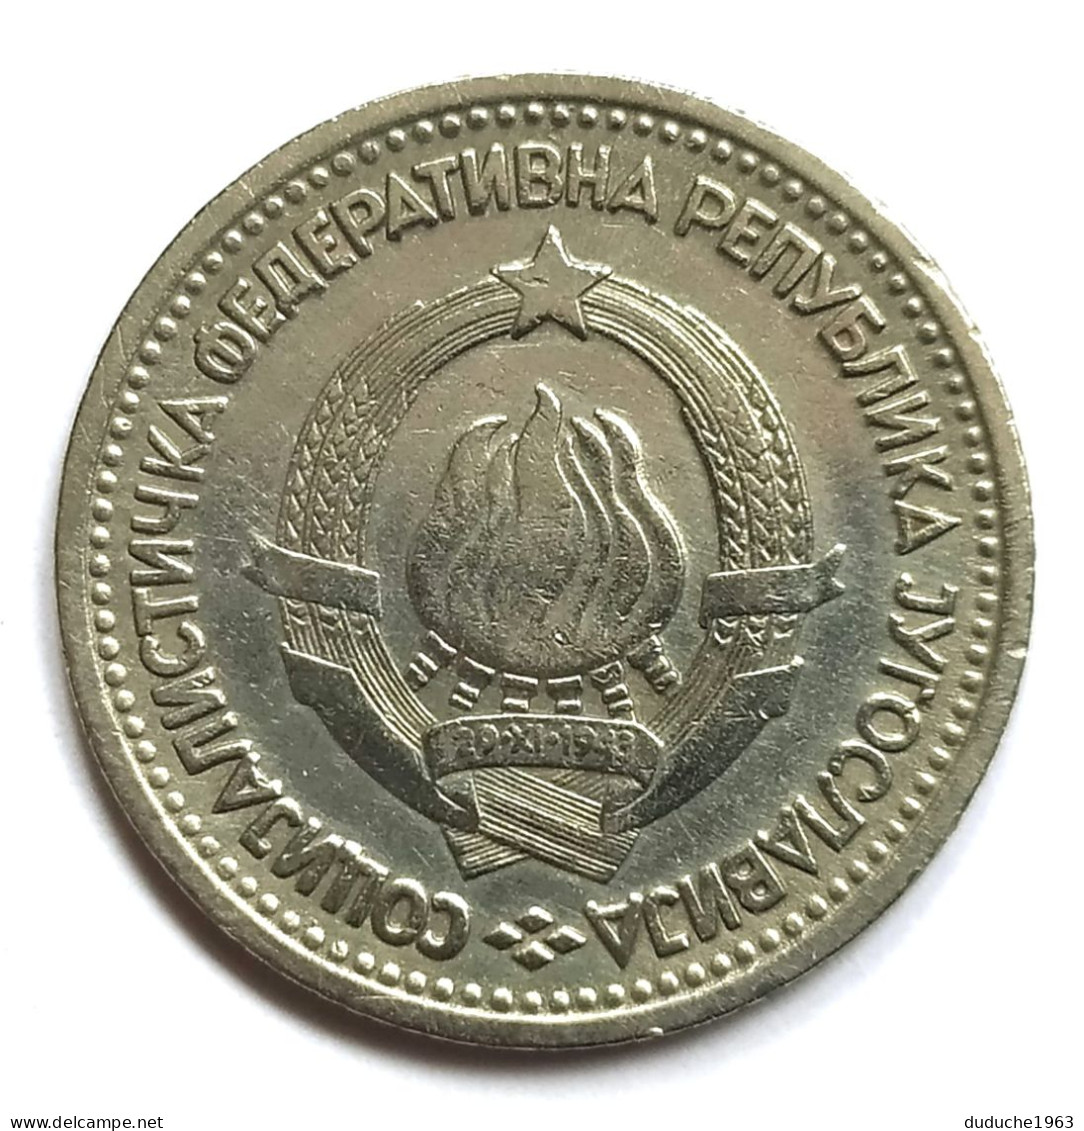 Yougoslavie - 1 Dinar 1965 - Joegoslavië